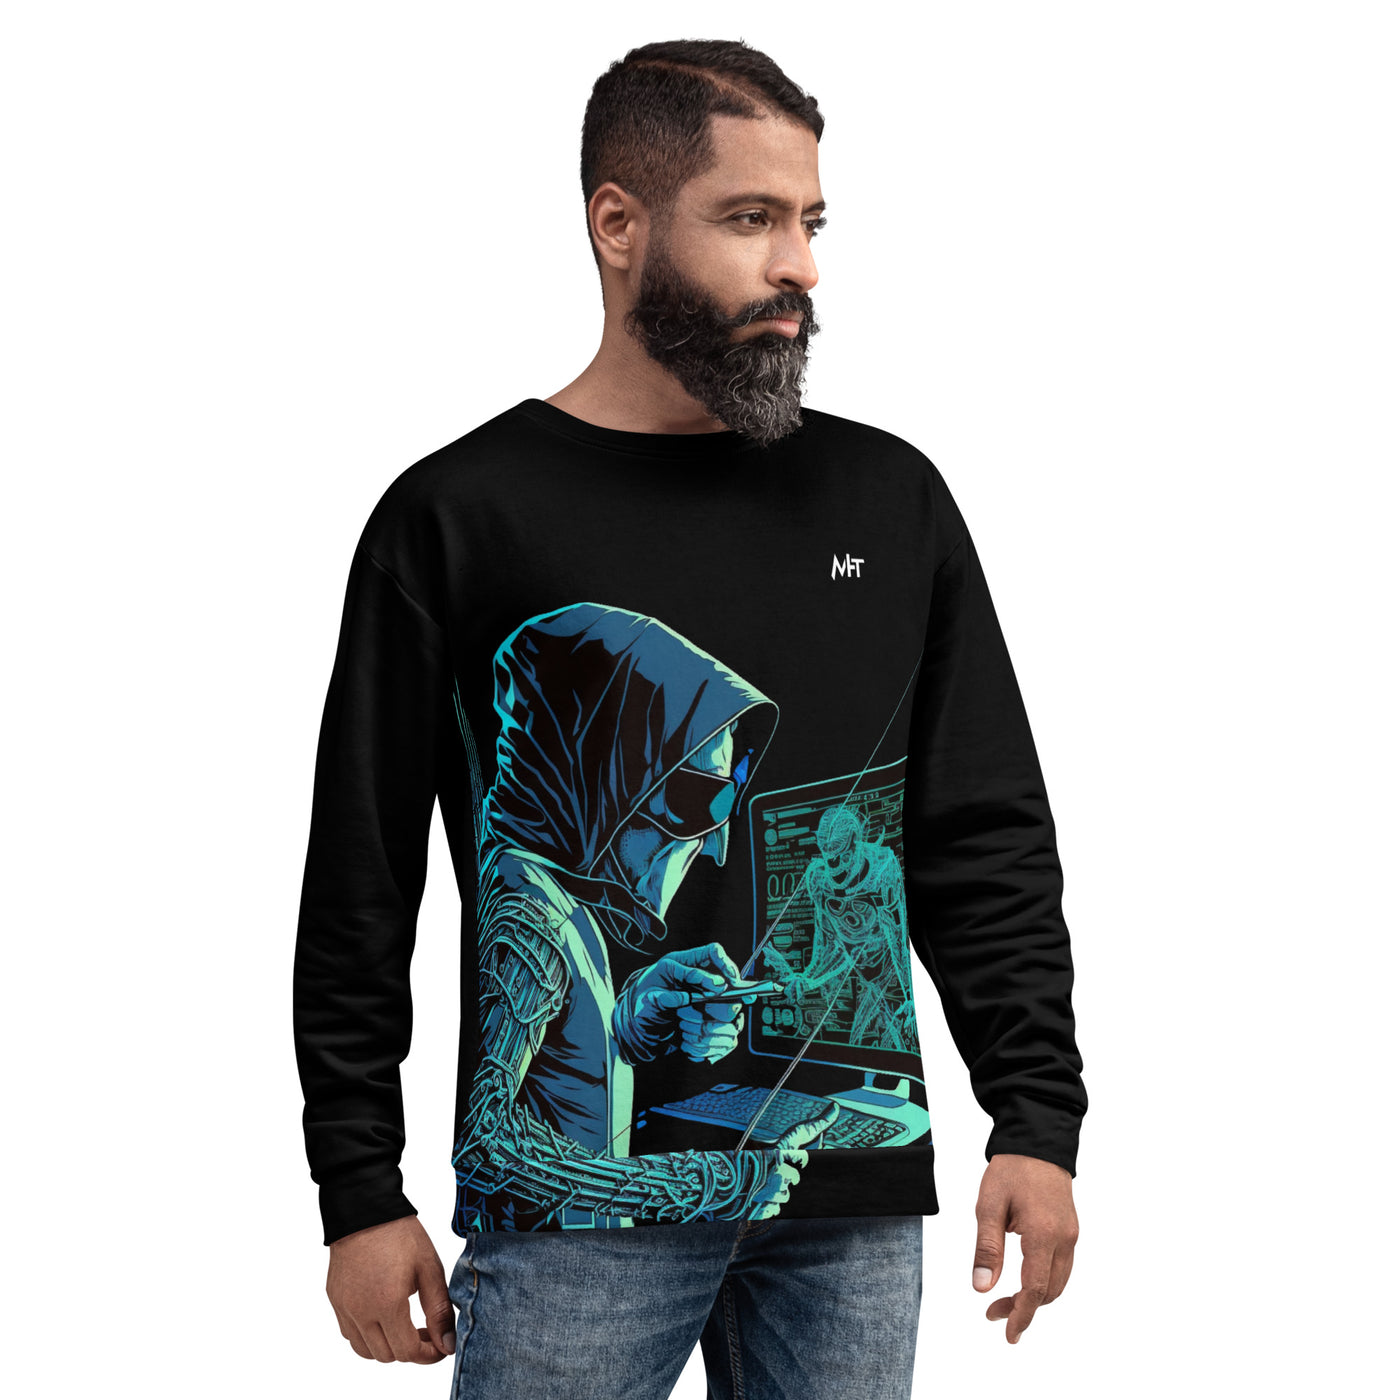 CyberWare Assassin - Unisex Sweatshirt